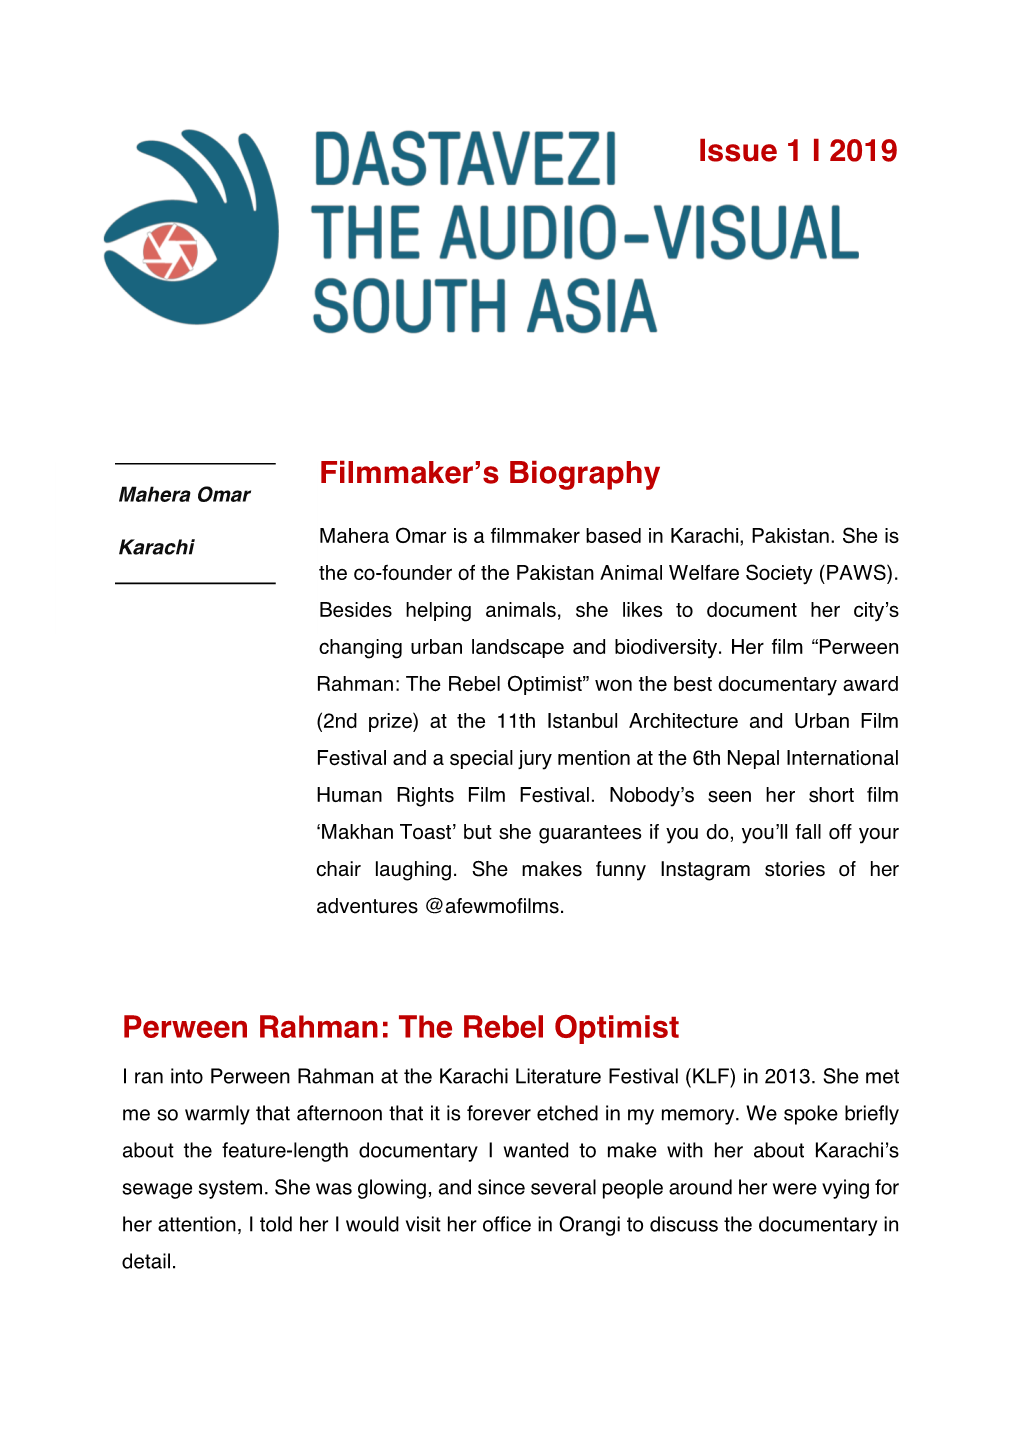 Perween Rahman: the Rebel Optimist